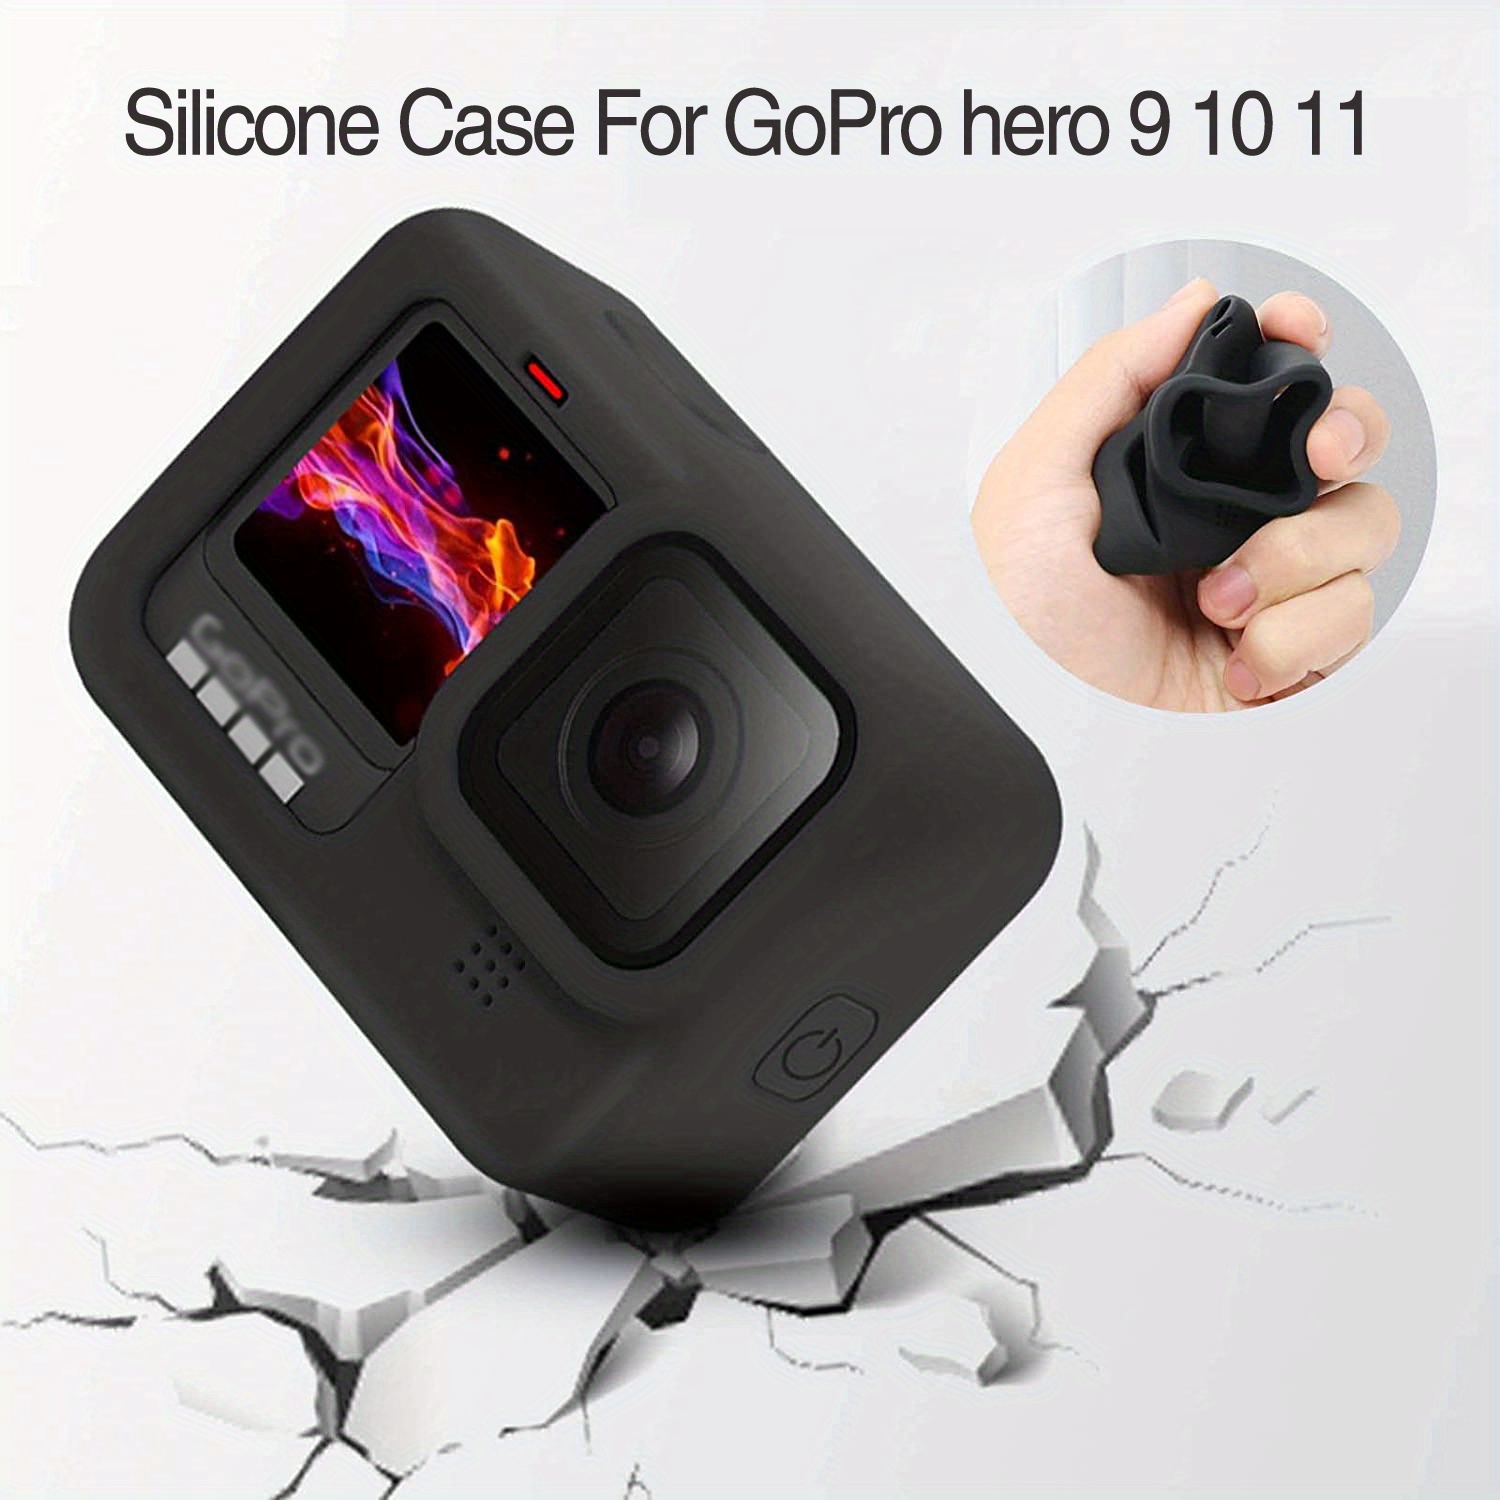 Offre groupée d'accessoires GoPro HERO 11 limited - Kamera Express